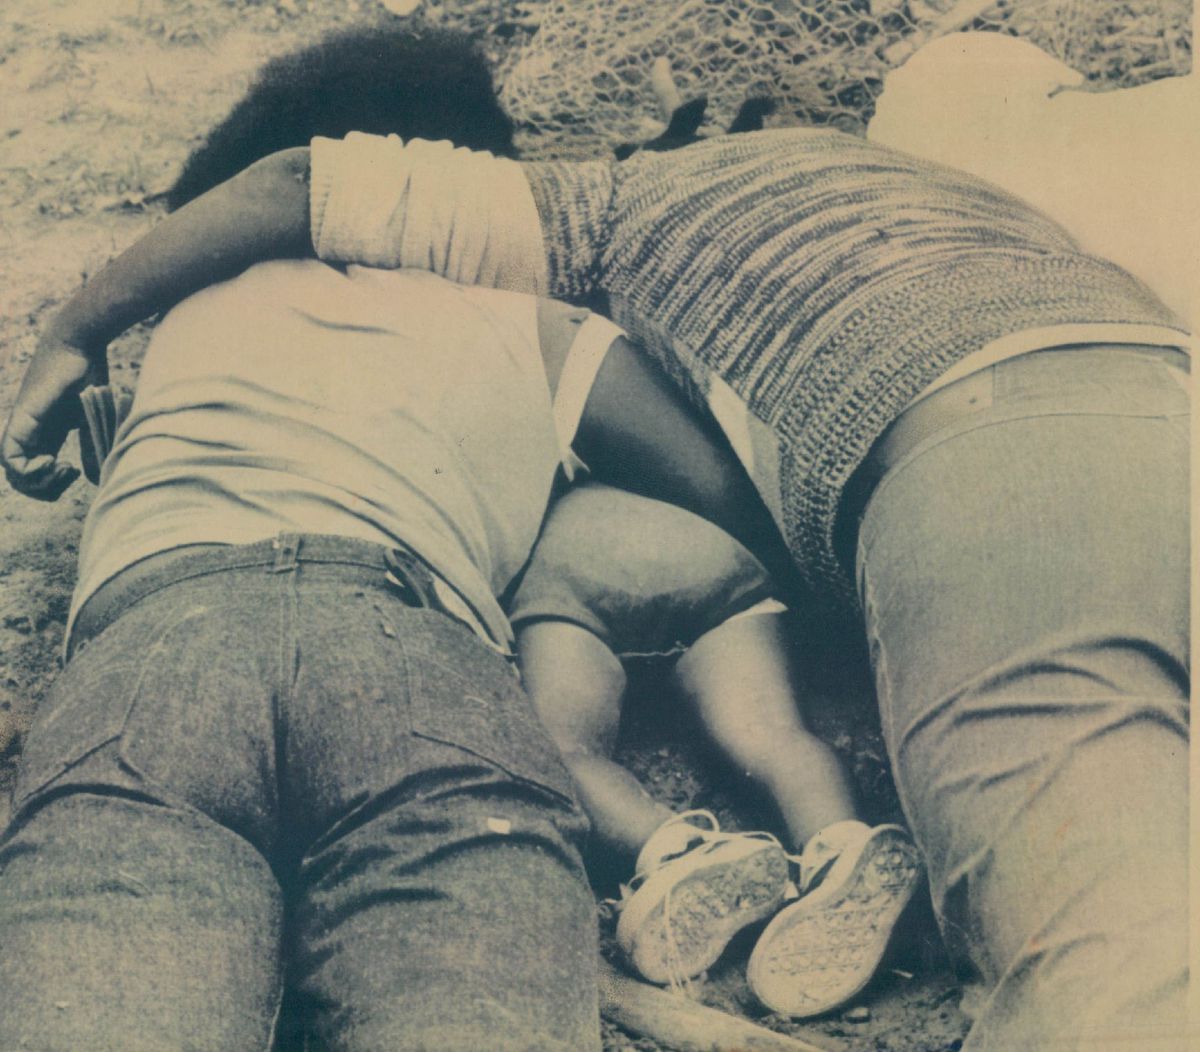 A man woman lie face down with a child between them in Jonestown, Guyana Monday following a mass suicide.